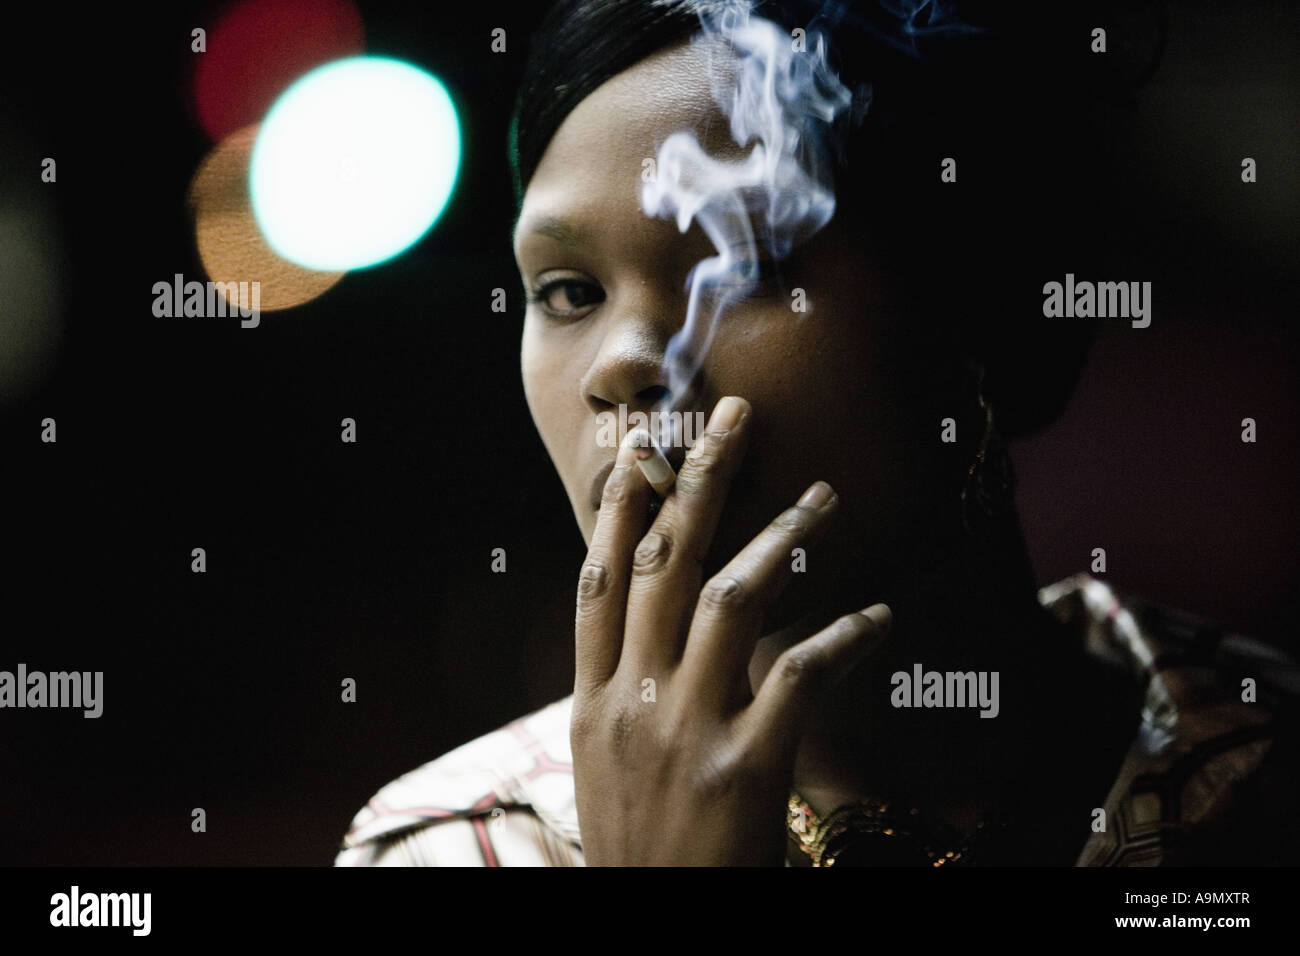 Close-up of a woman smoking a cigarette Banque D'Images